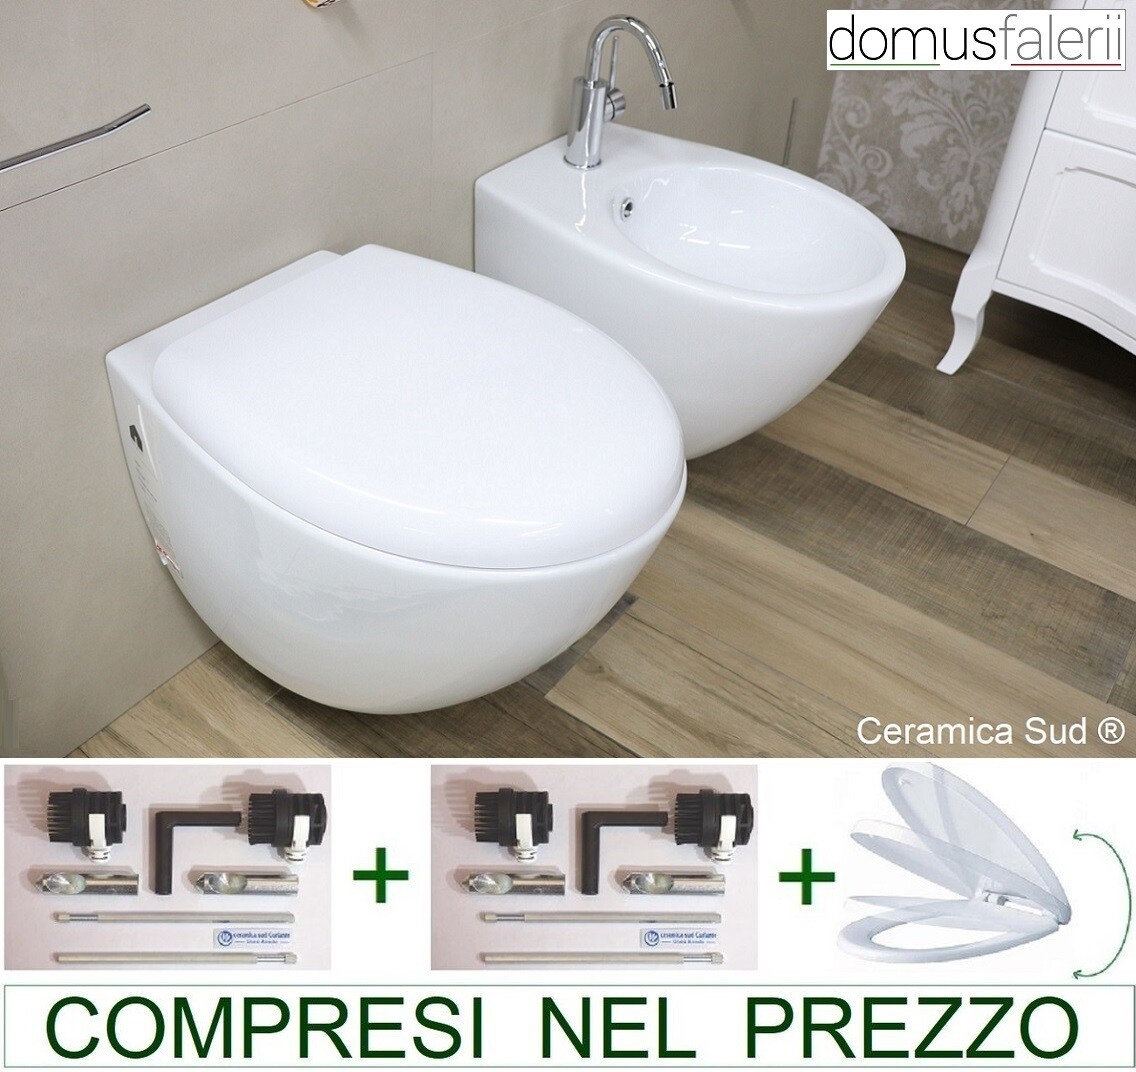 Klein Italiaans hangend sanitair 48 cm. Randvrij Domus Falerii - + Bidet + Toiletdeksel + bevestigingen - Keramiek